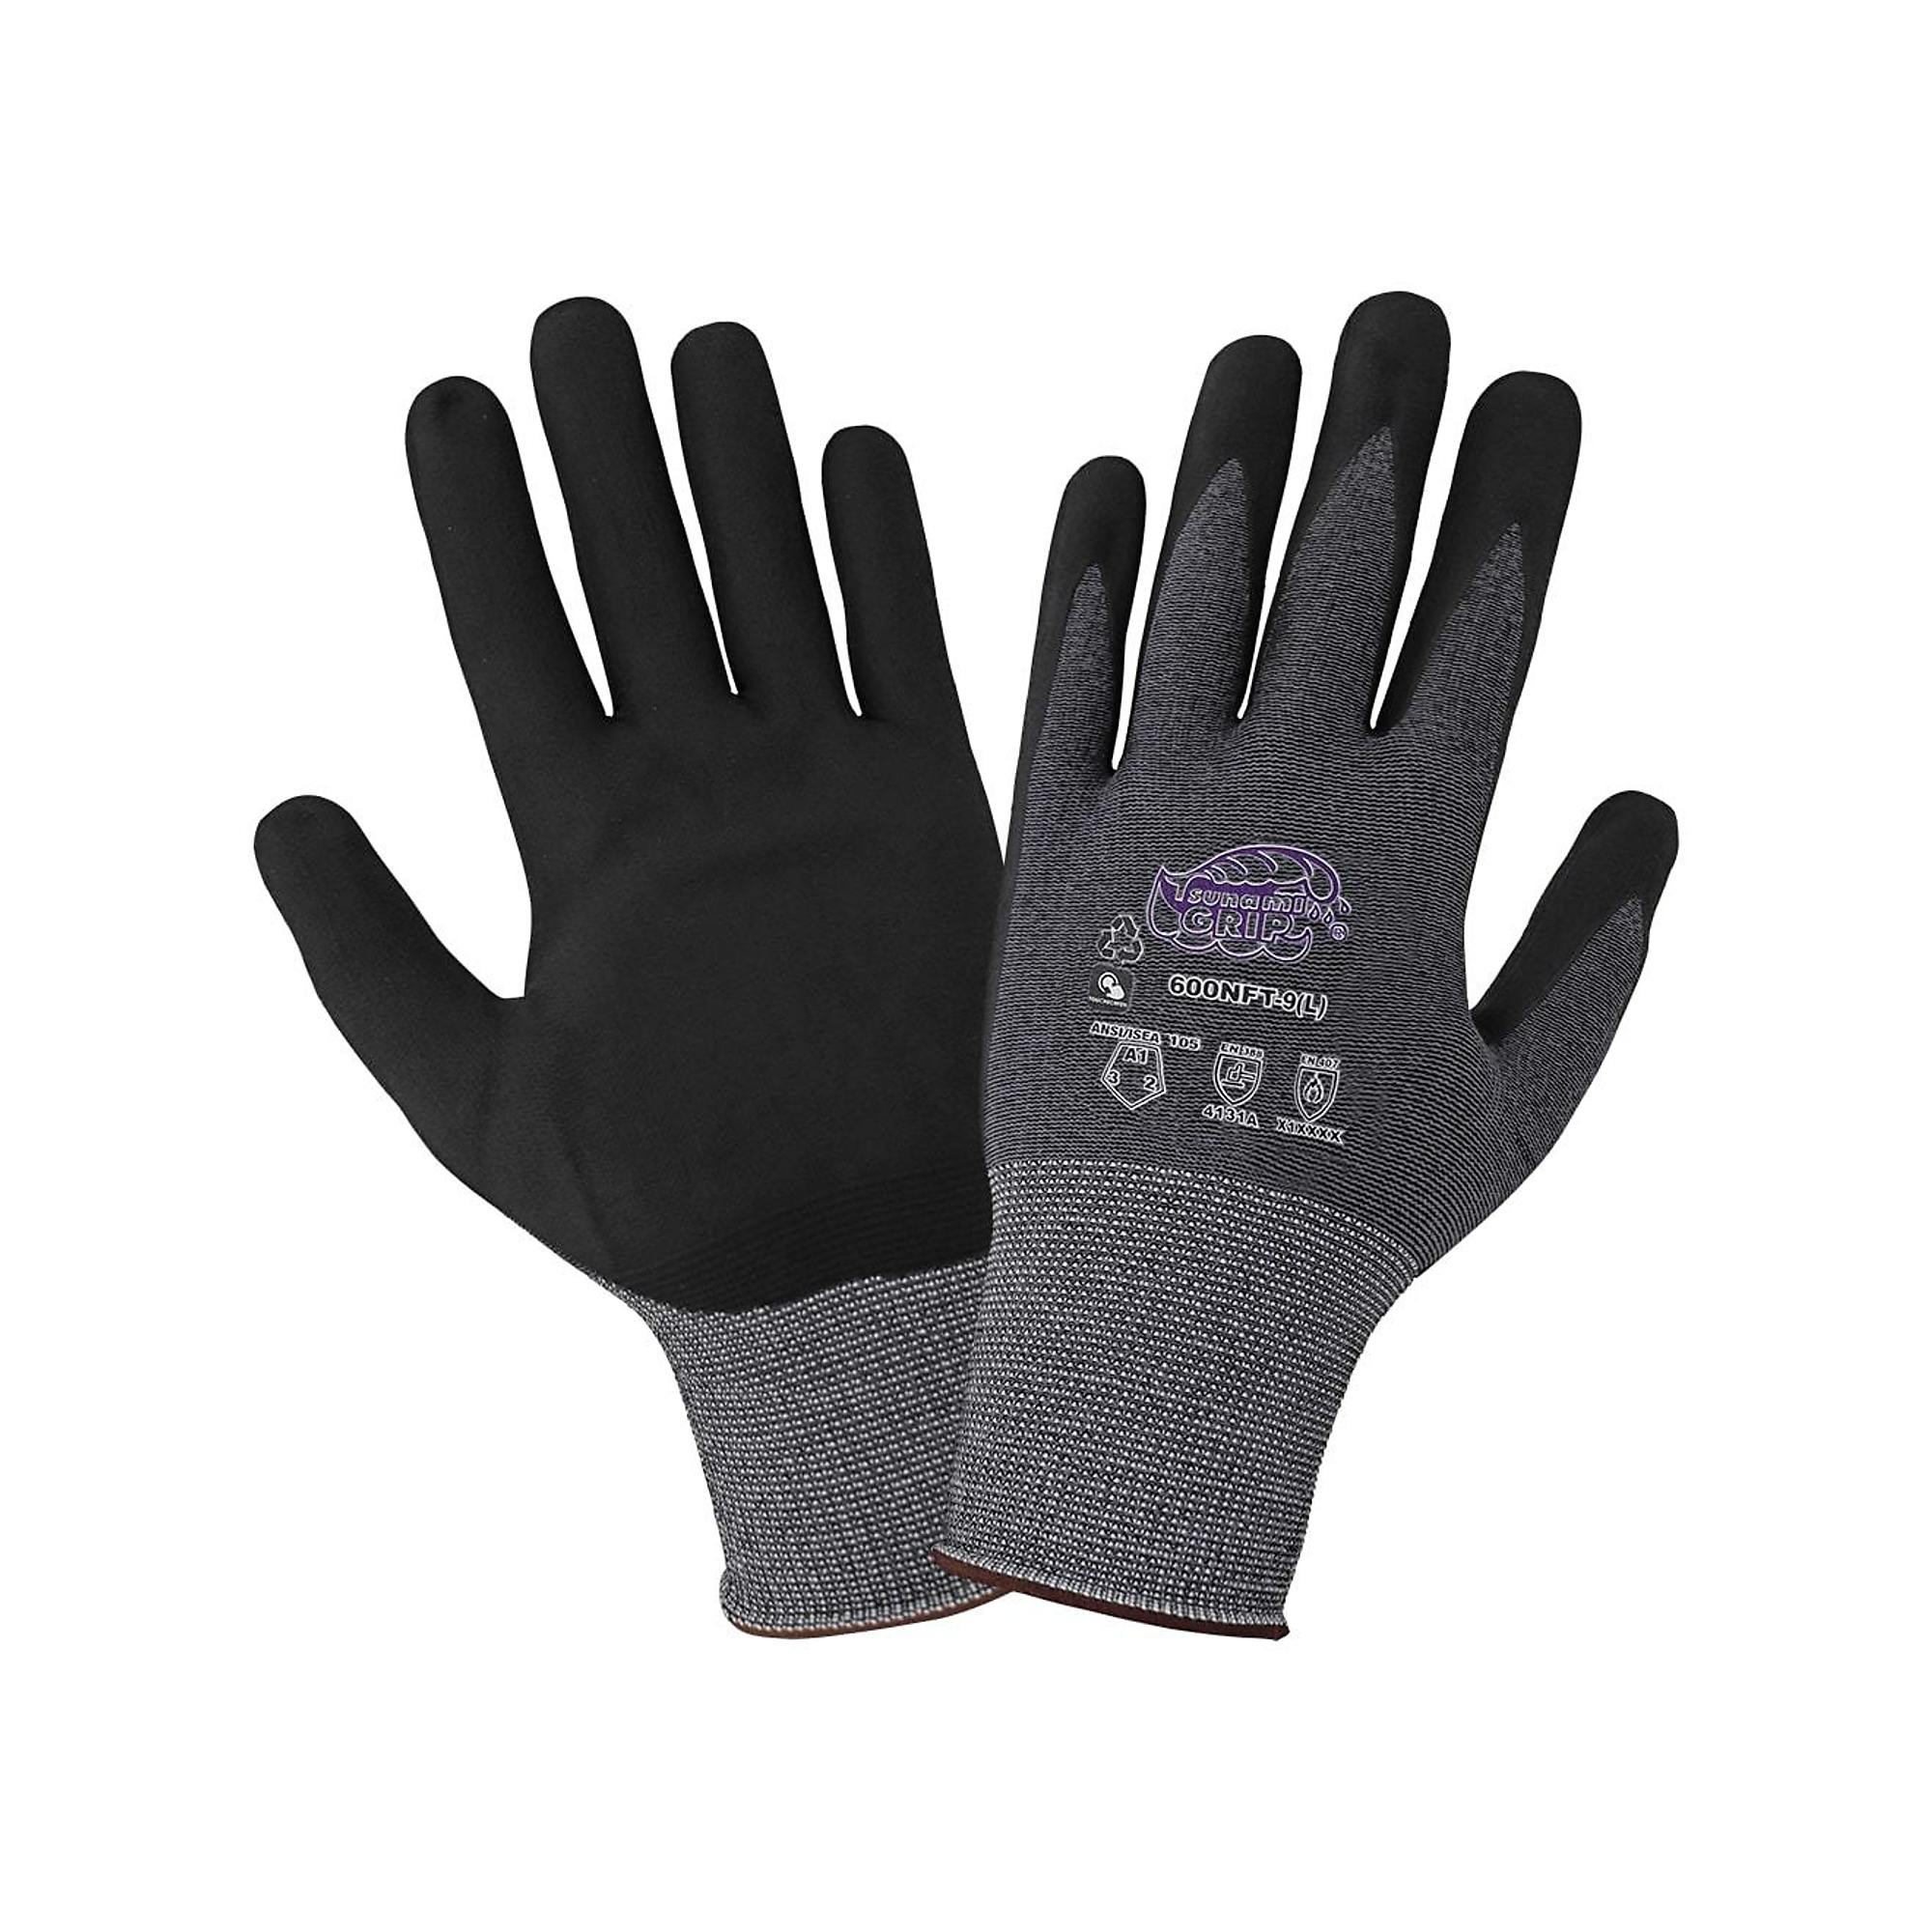 Global Glove Tsunami Grip , Tsunami Grip Lightweight, Foam Nitrile Gloves - 12 Pairs, Size 2XL, Color Gray, Included (qty.) 12 Model 600NFT-11(2XL)